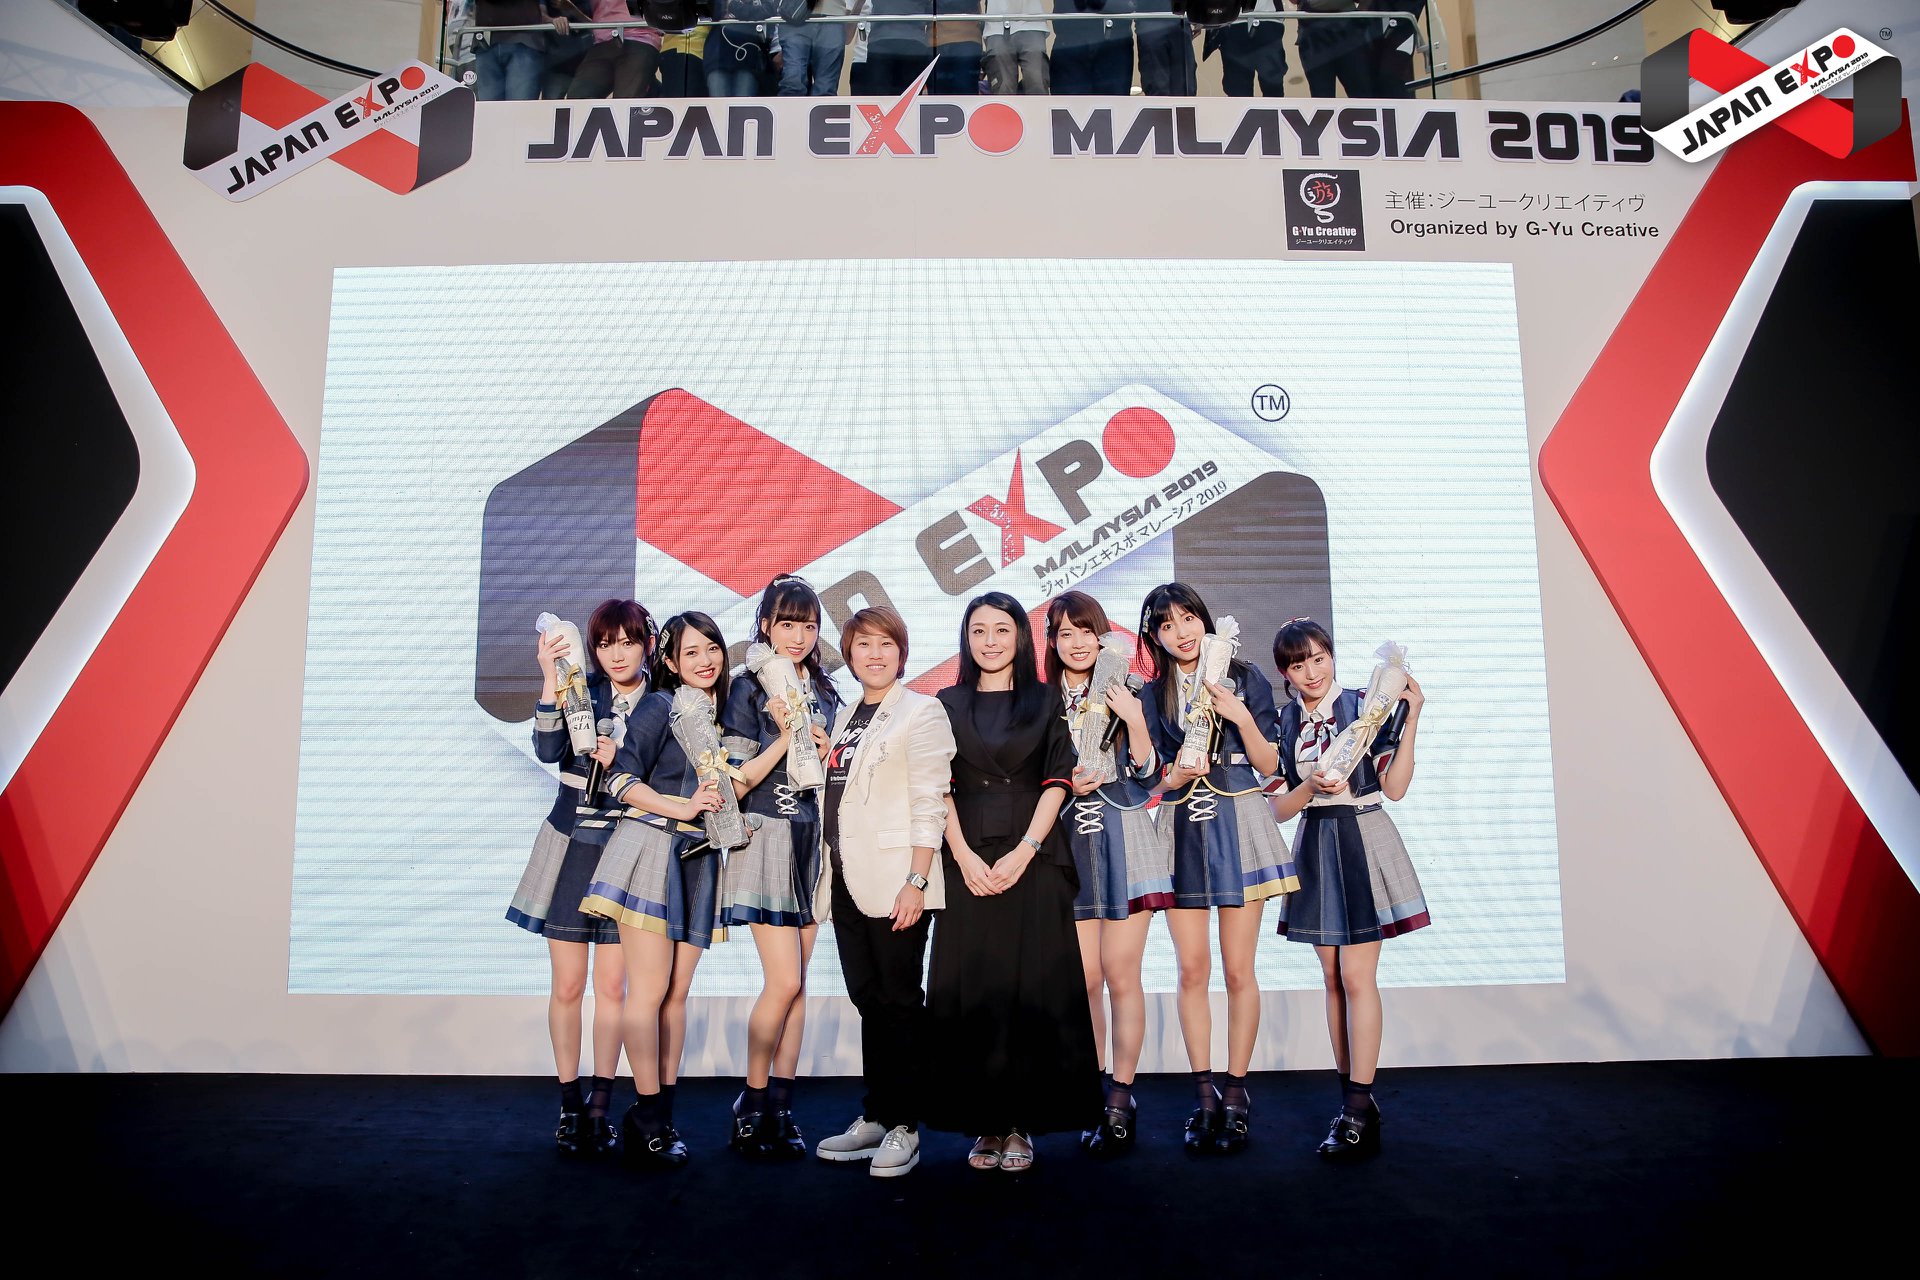 Japan Expo Malaysia เตรียมจัดงานรูปแบบออนไลน์ คอญี่ปุ่นเตรียมฟิน 18-19 ก.ค.นี้